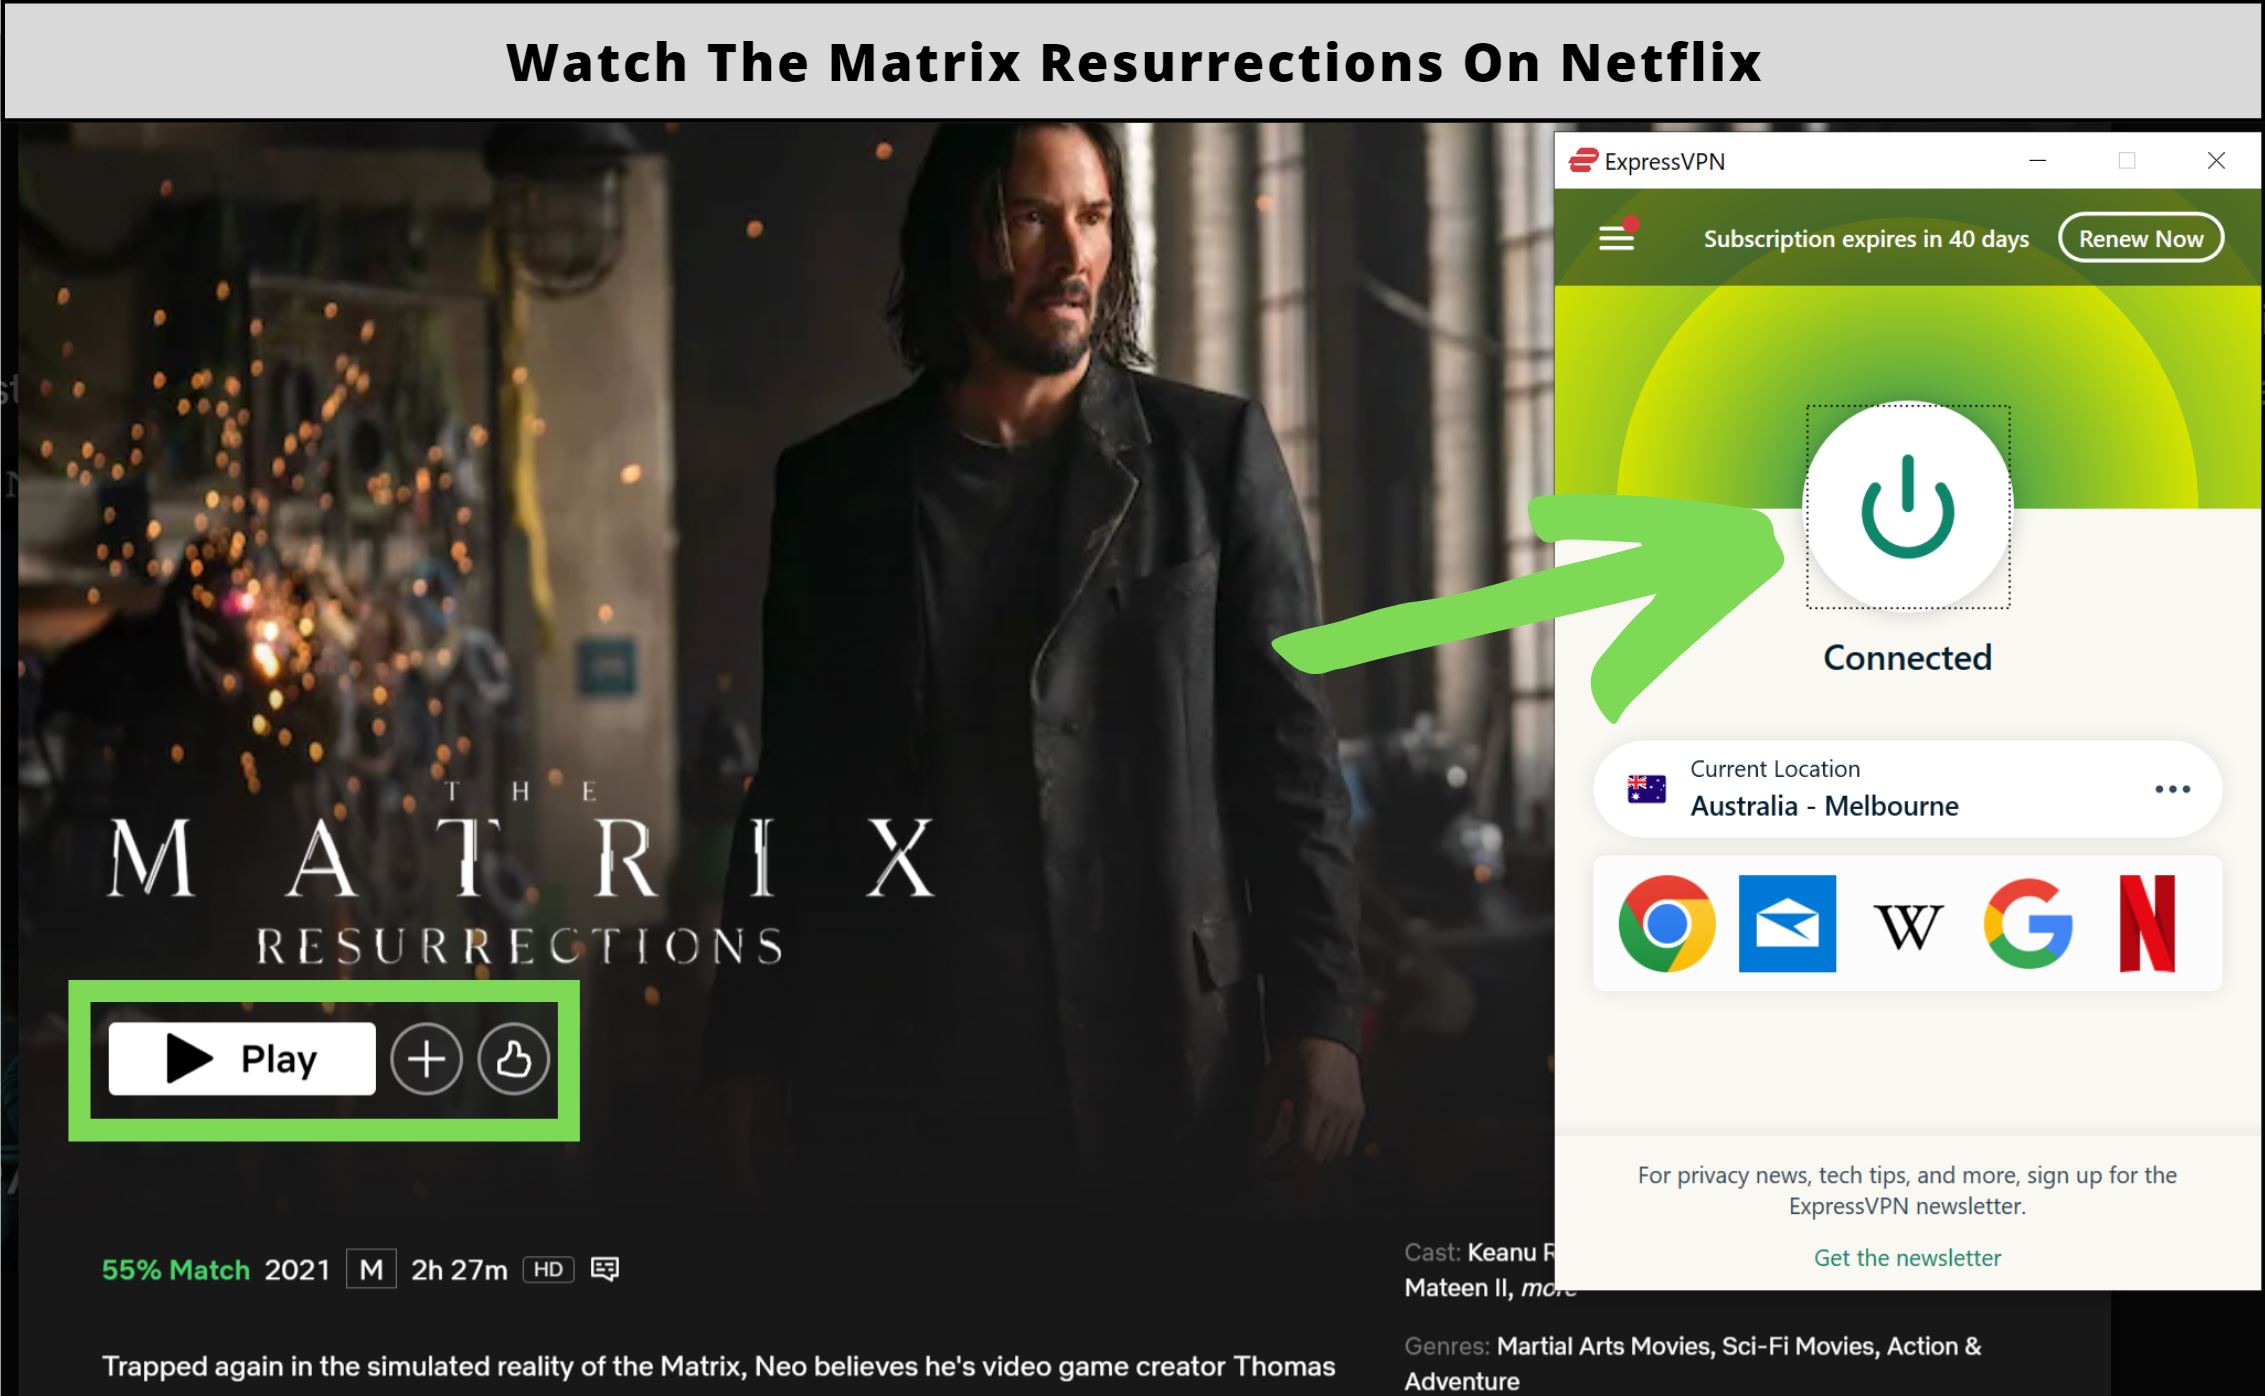 Is The Matrix Resurrections on Netflix?